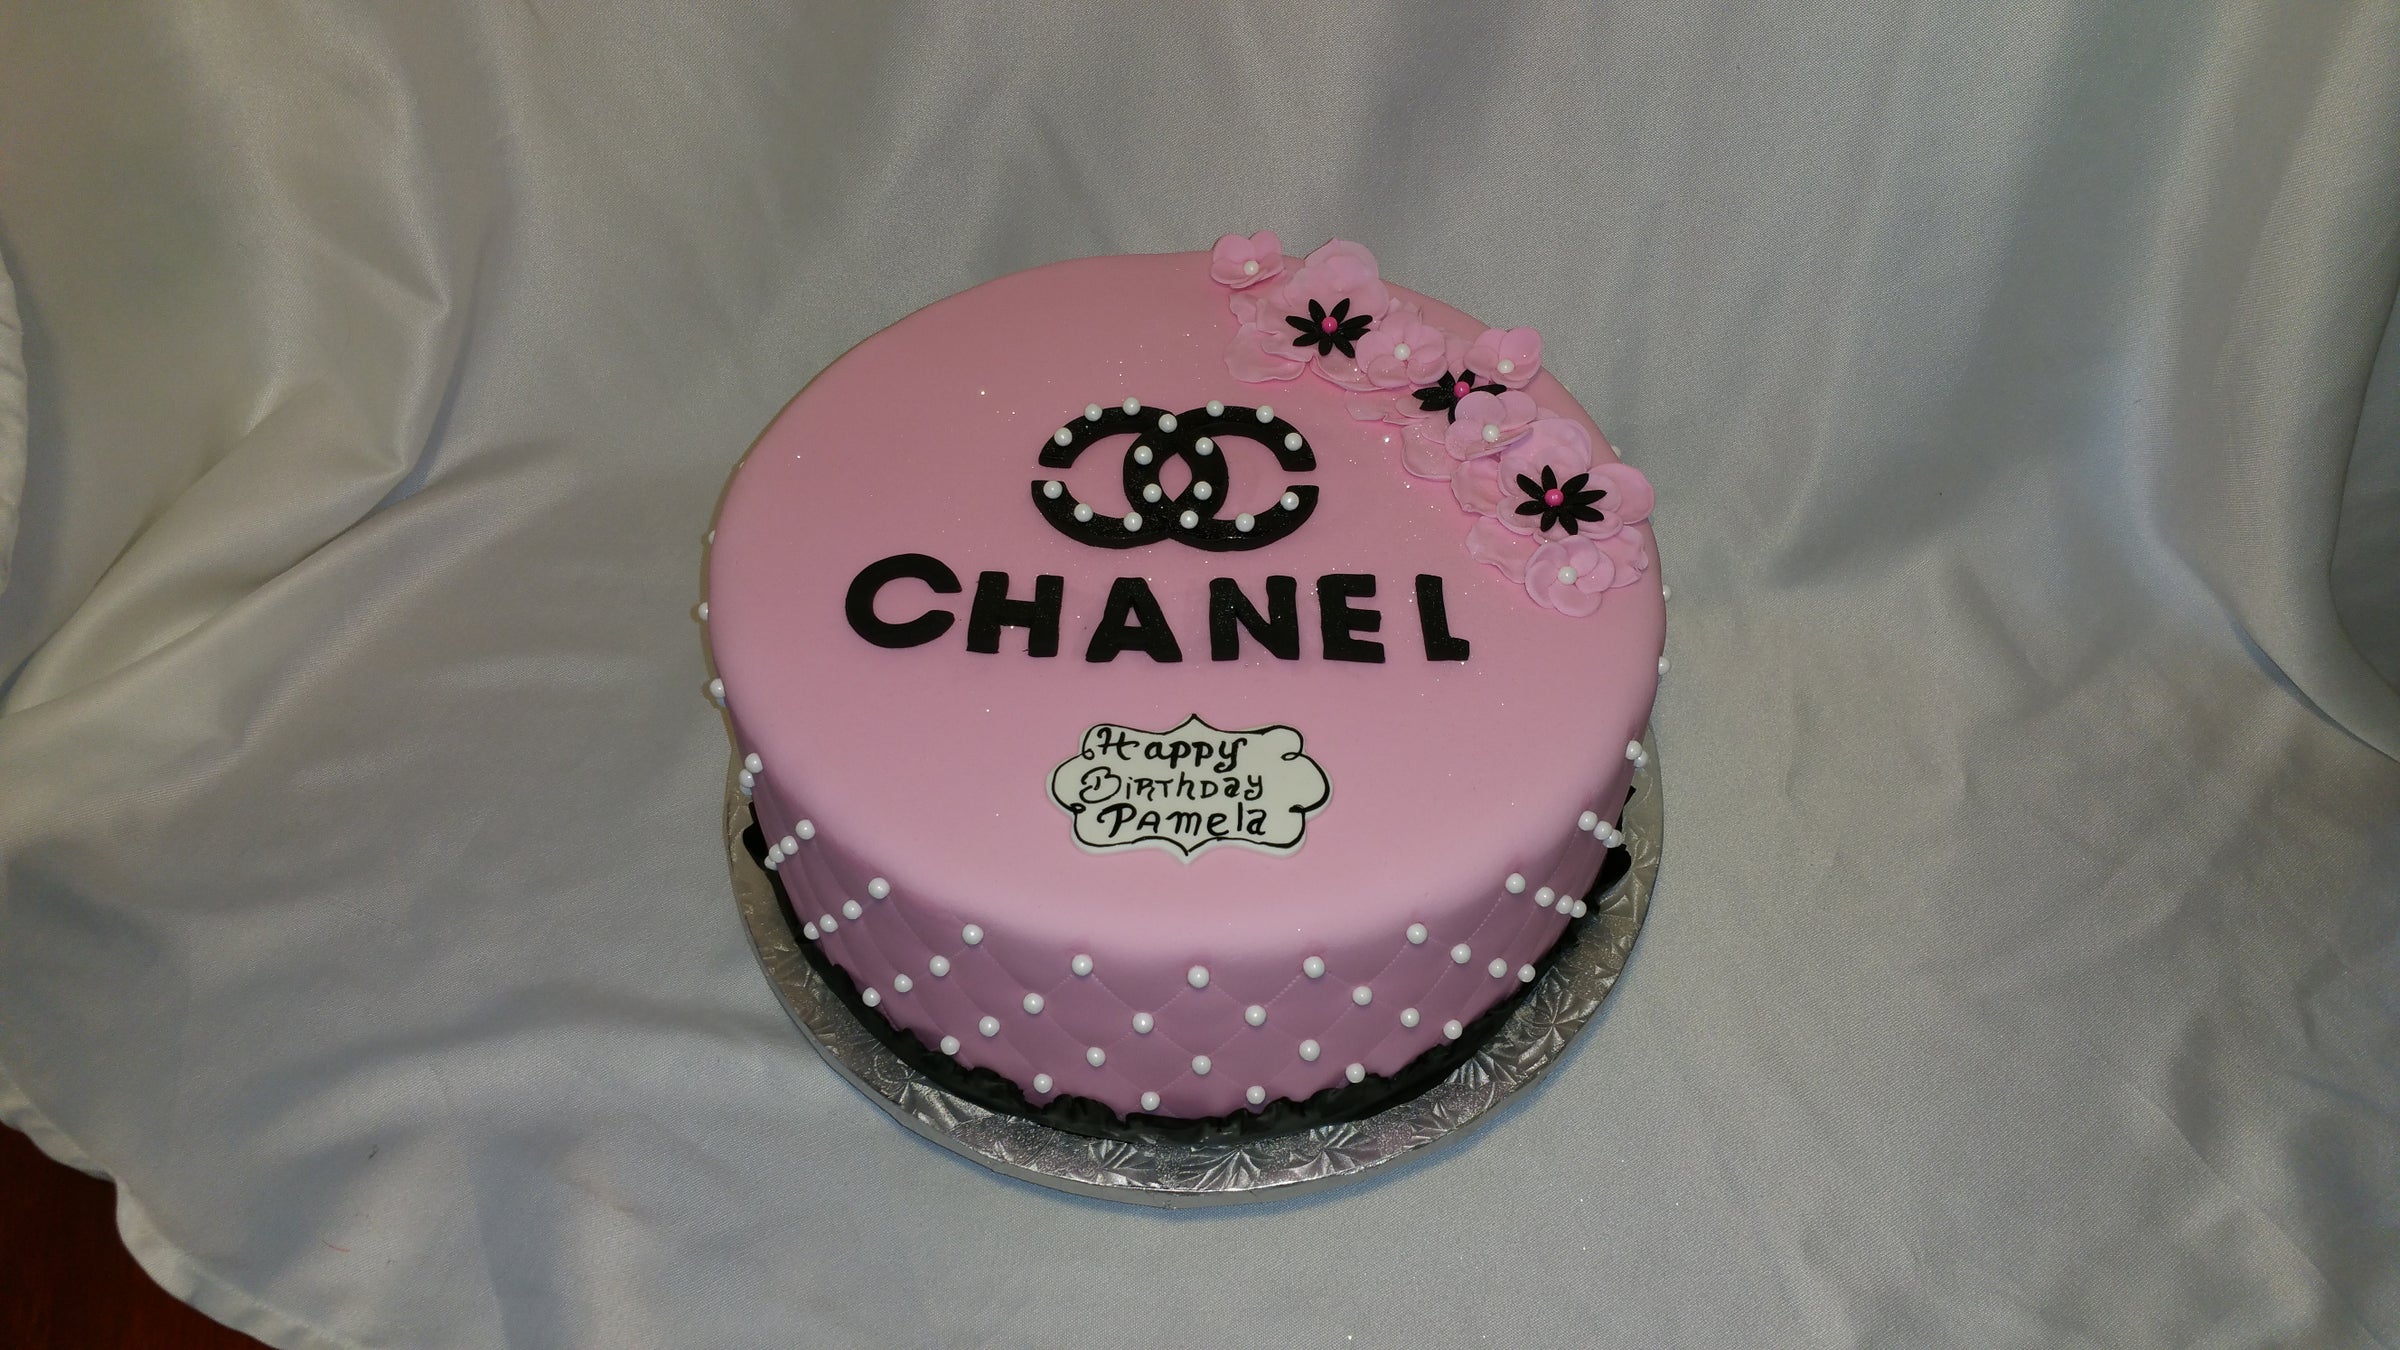 CHANEL cakes